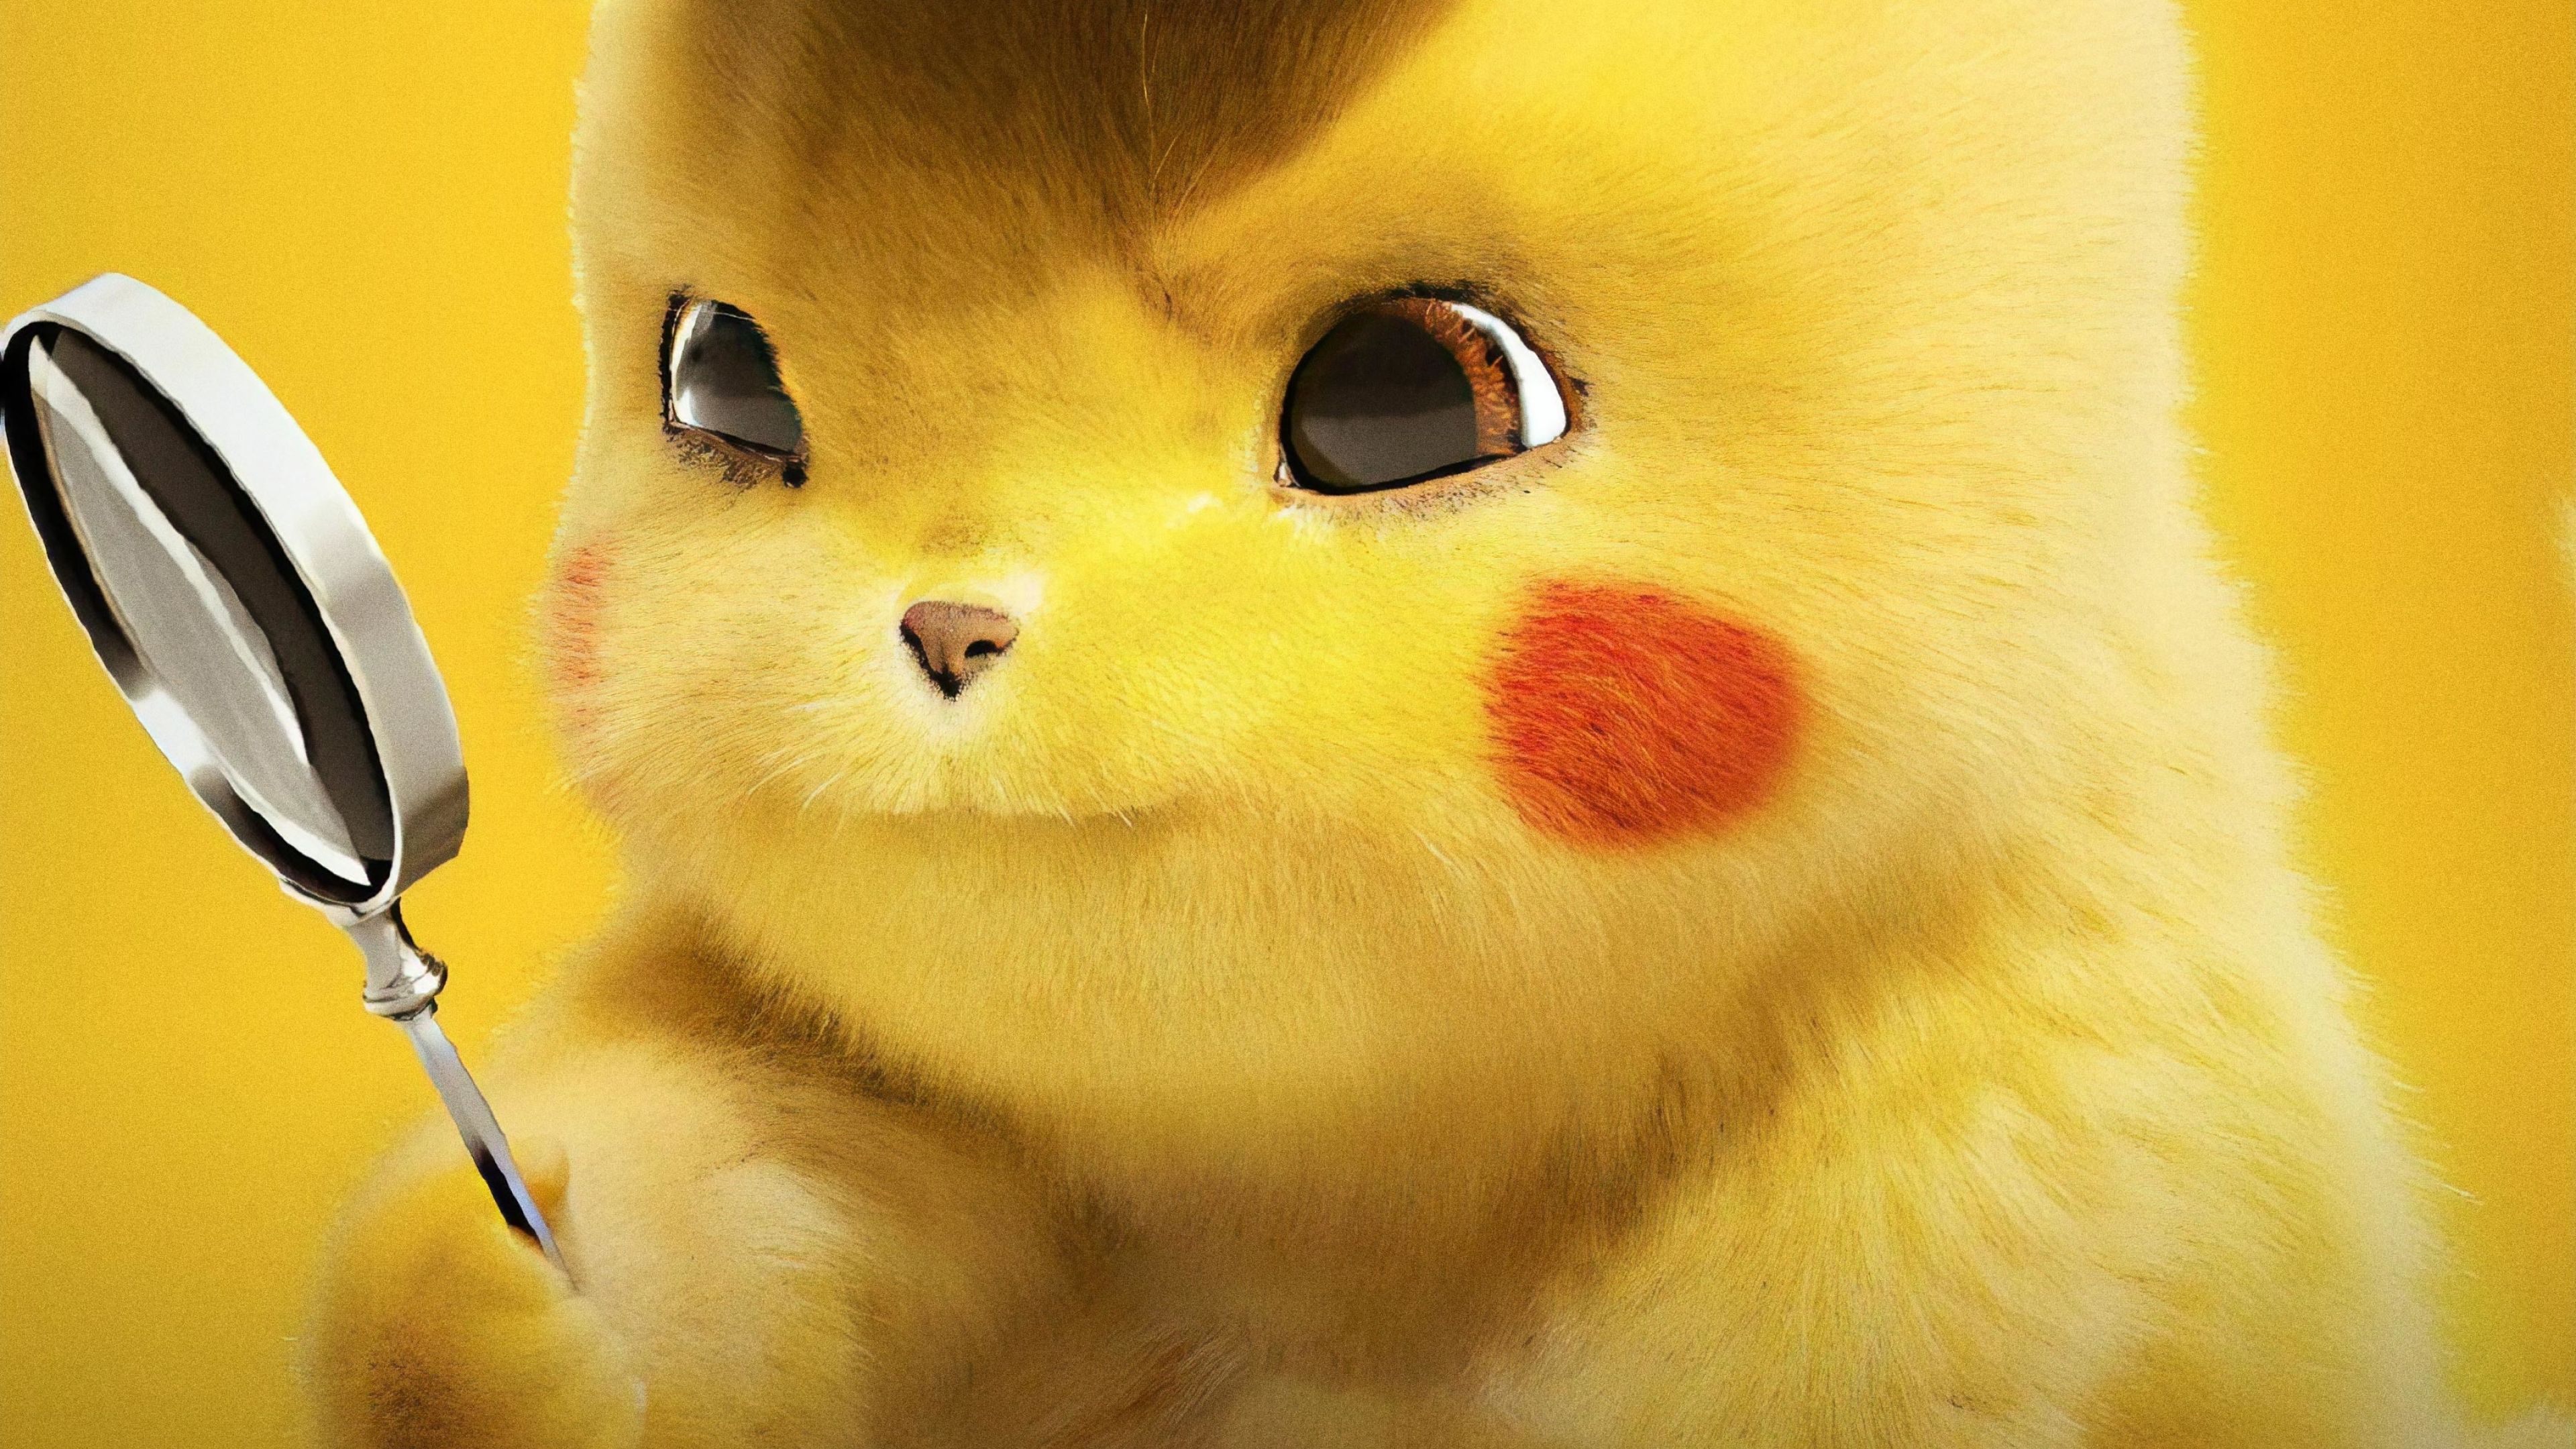 Pokemon Detective Pikachu 4K Wallpaper, HD Movies 4K Wallpaper, Image, Photo and Background